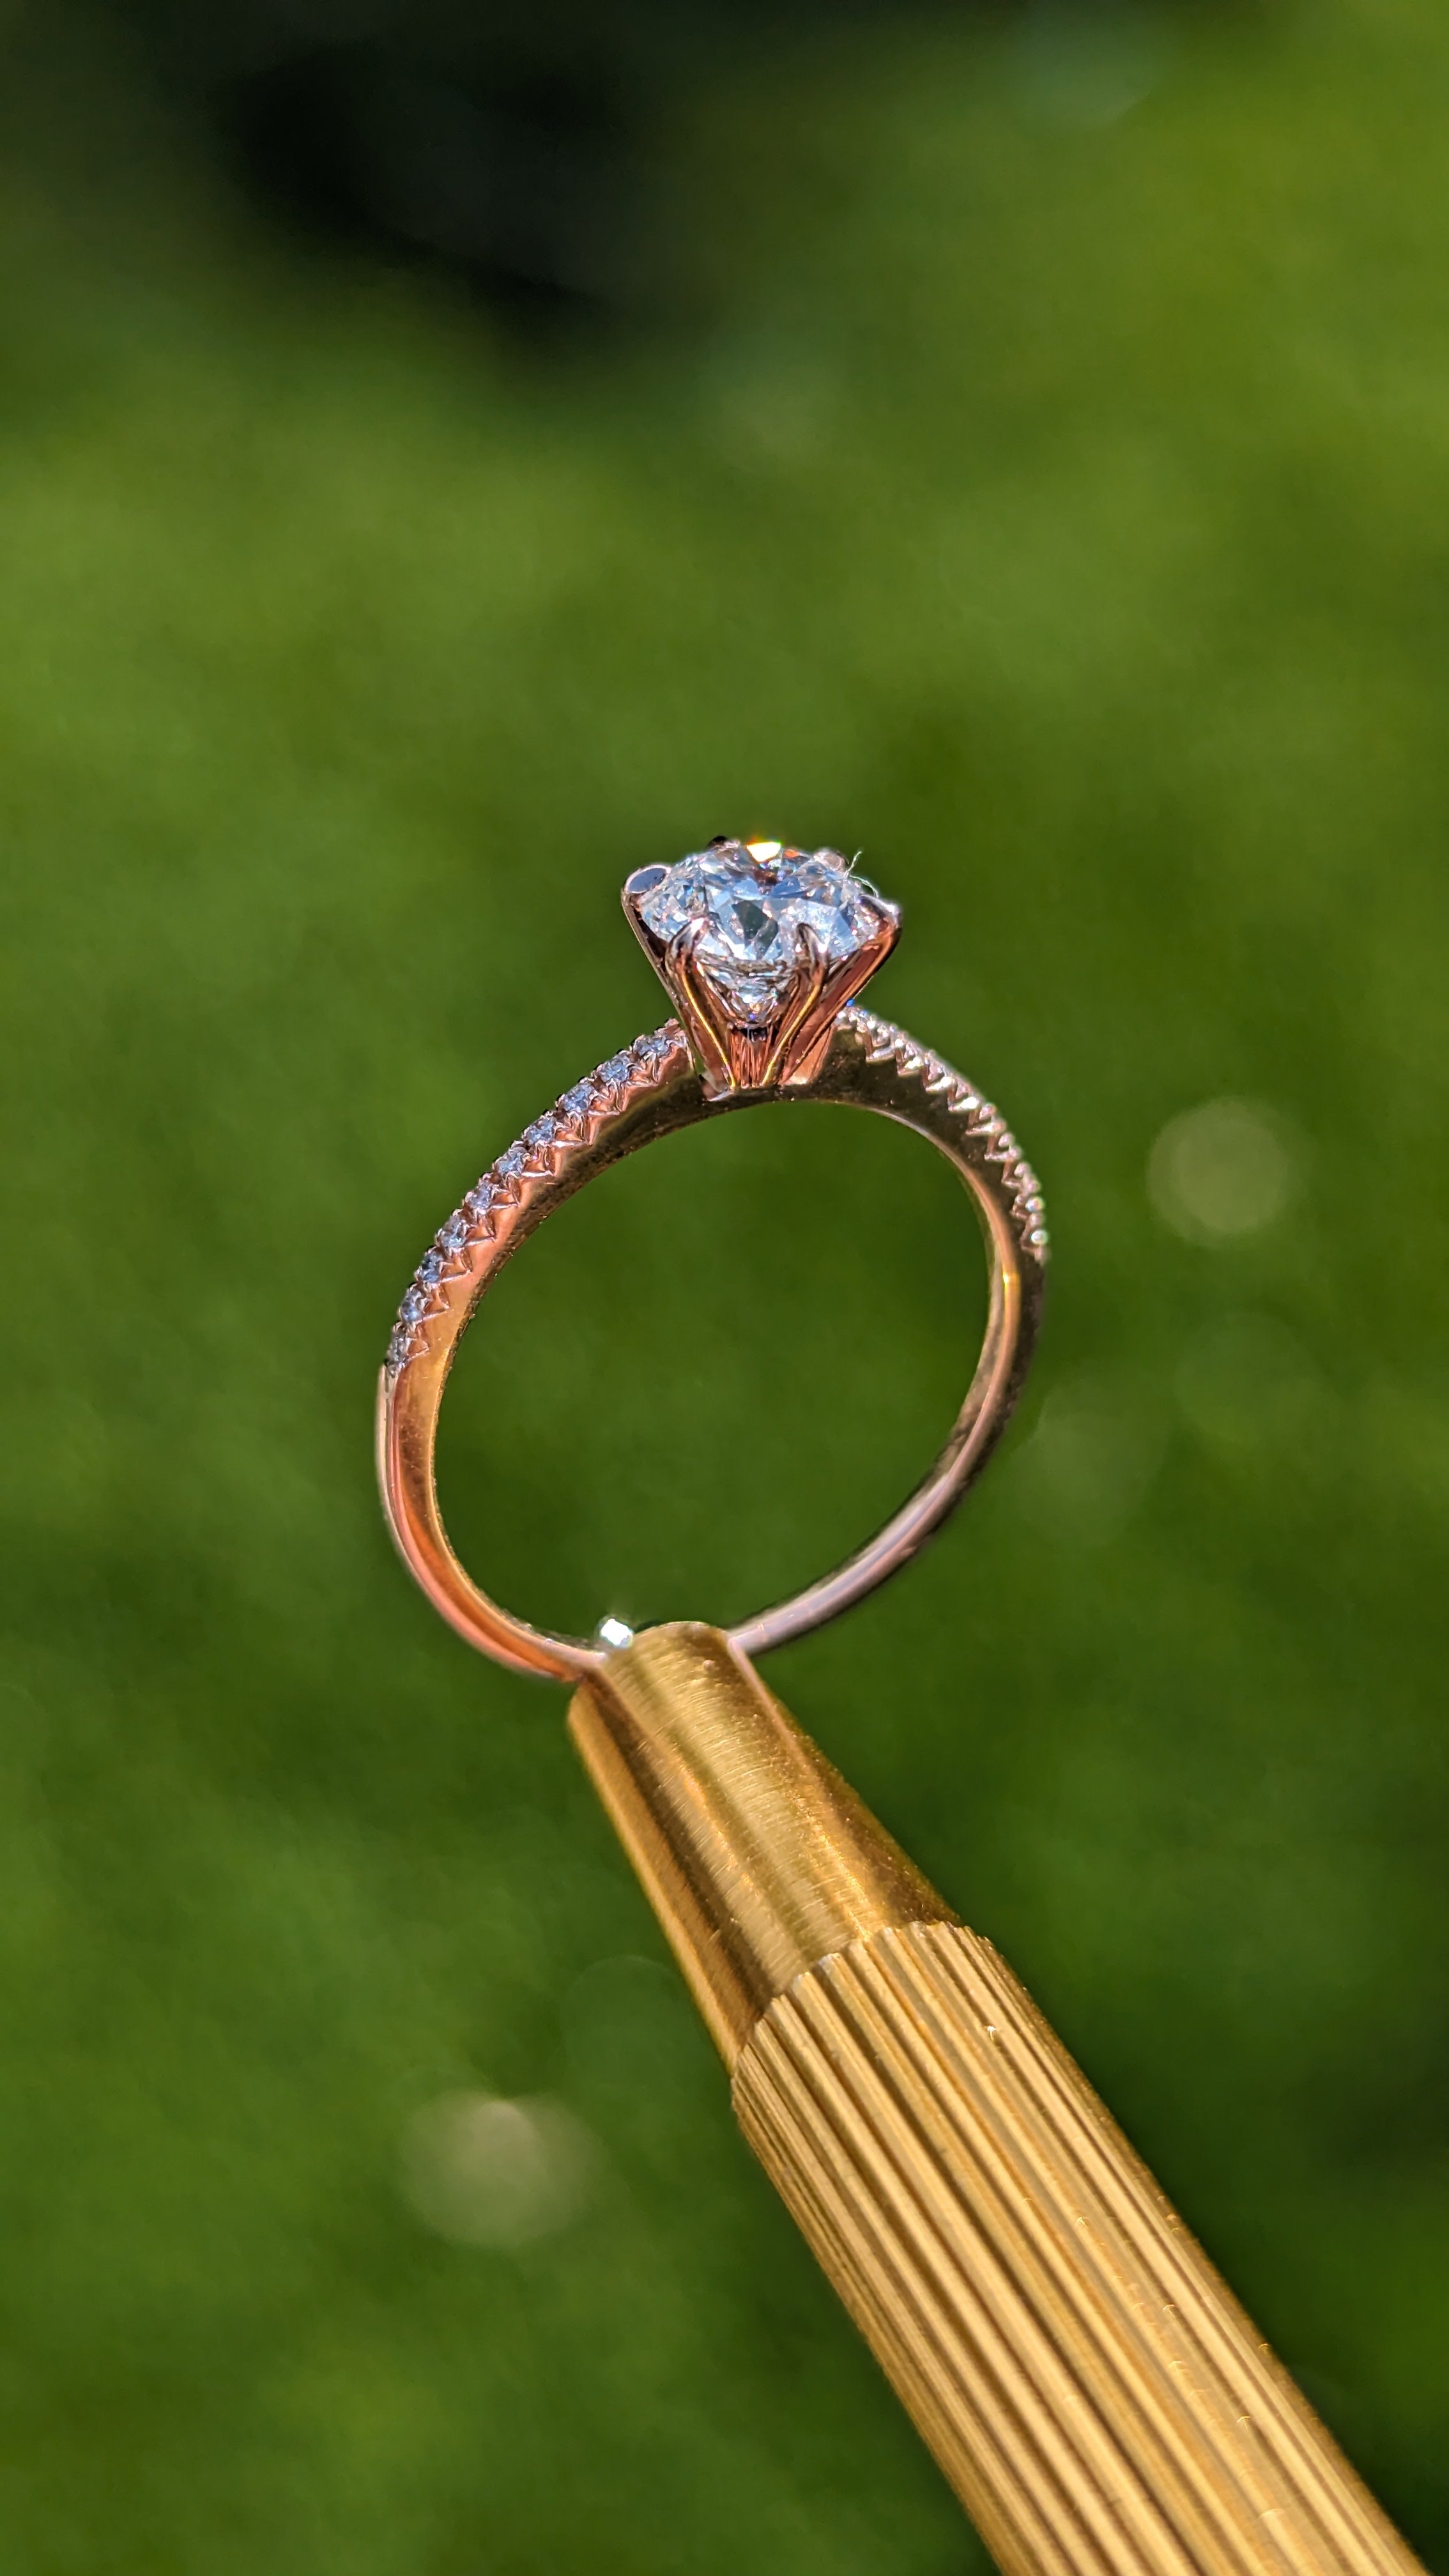 14k Solitaire Diamonds Engagement Ring